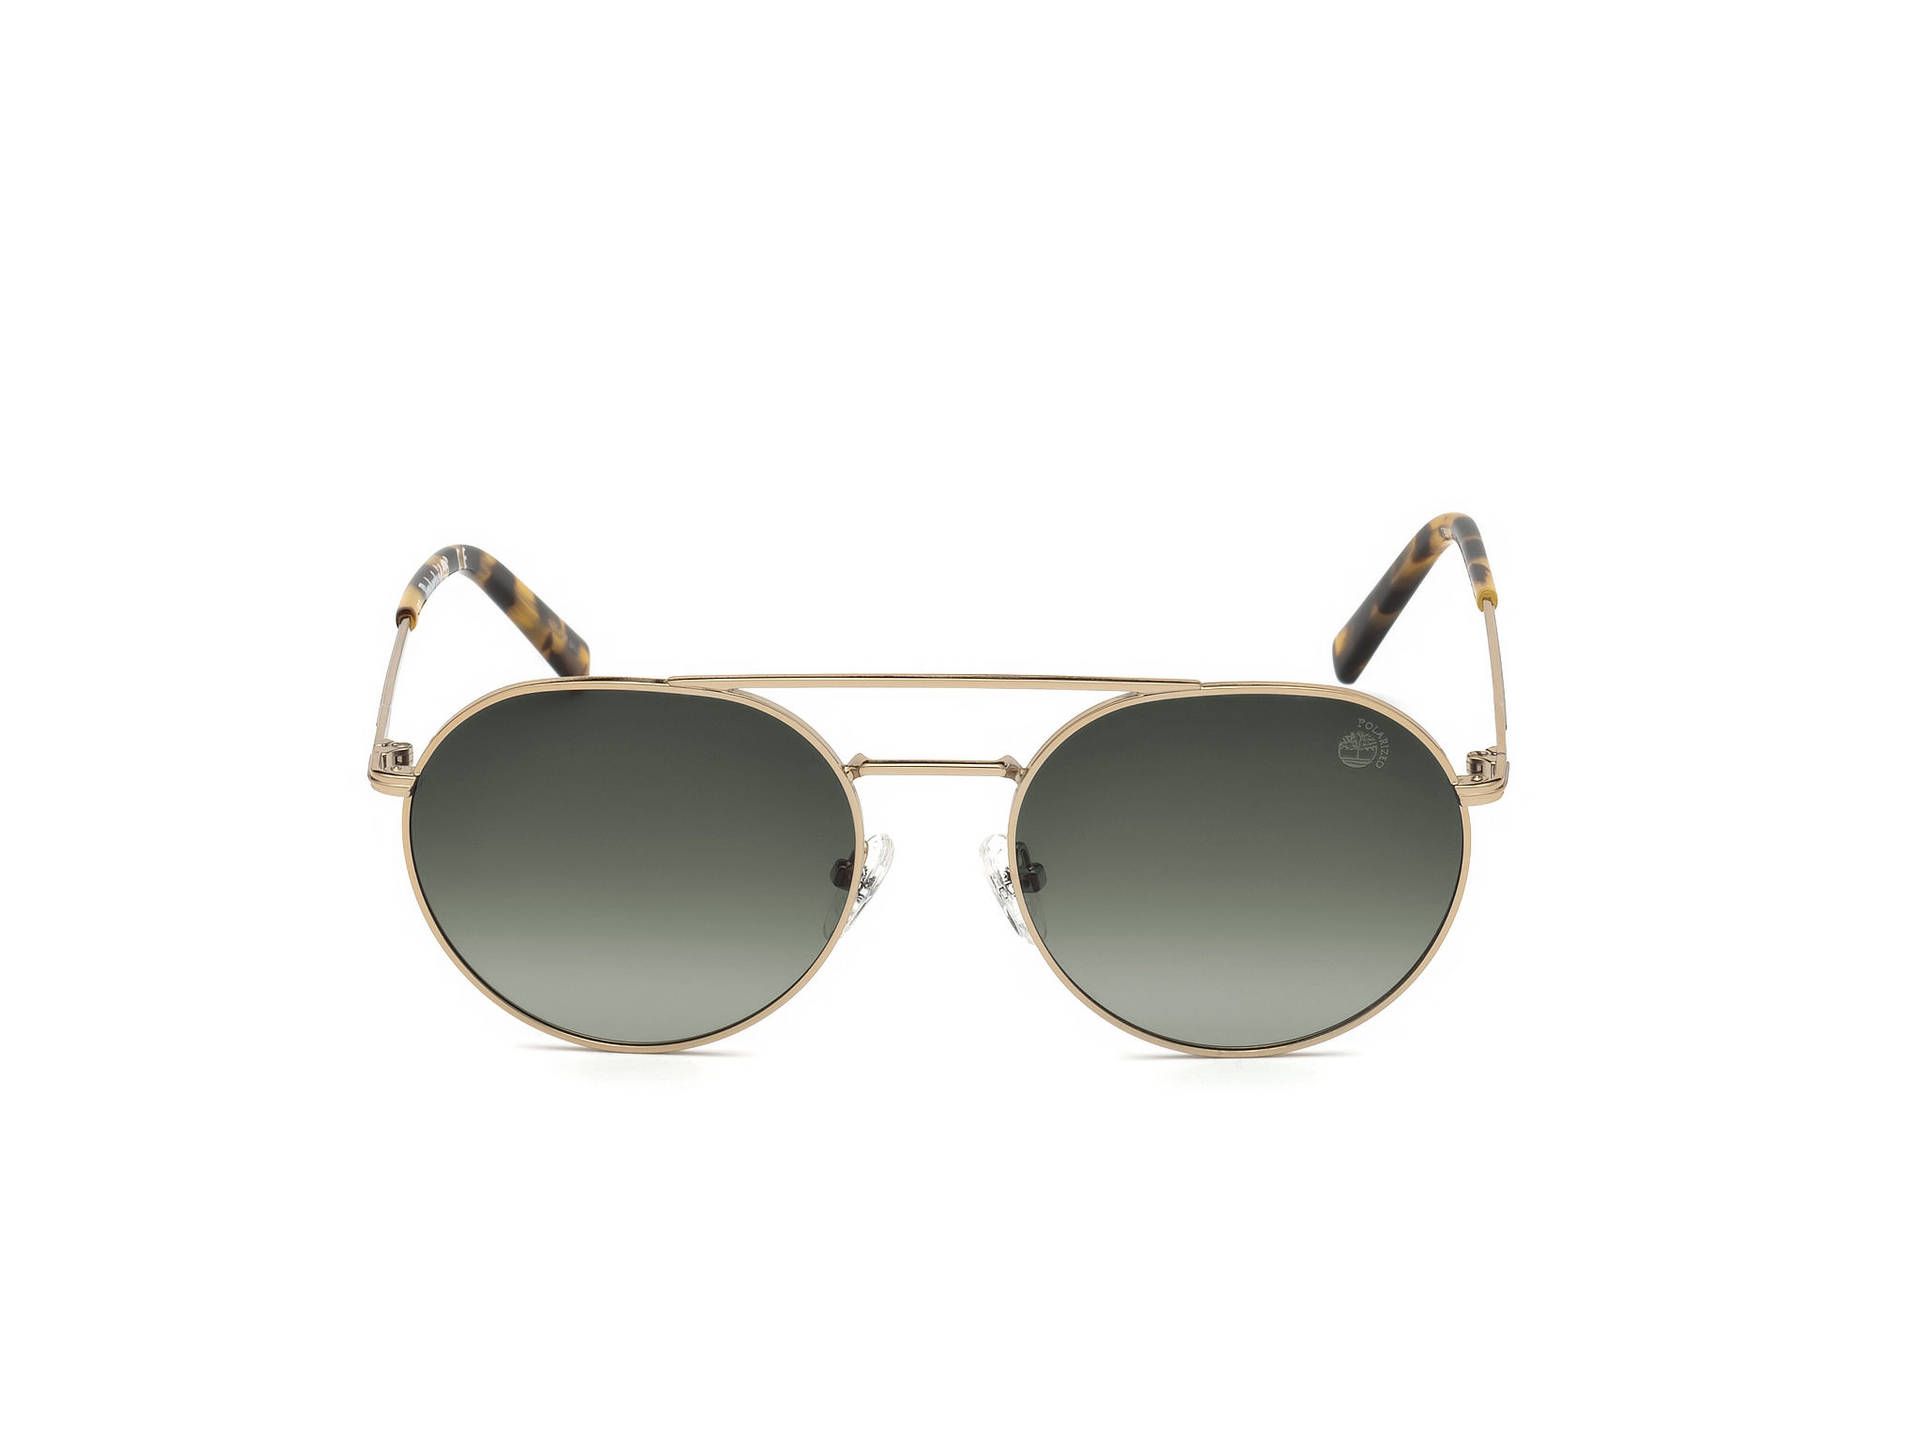 Timberland Sunglasses Uv Protected Lenses Wallpaper